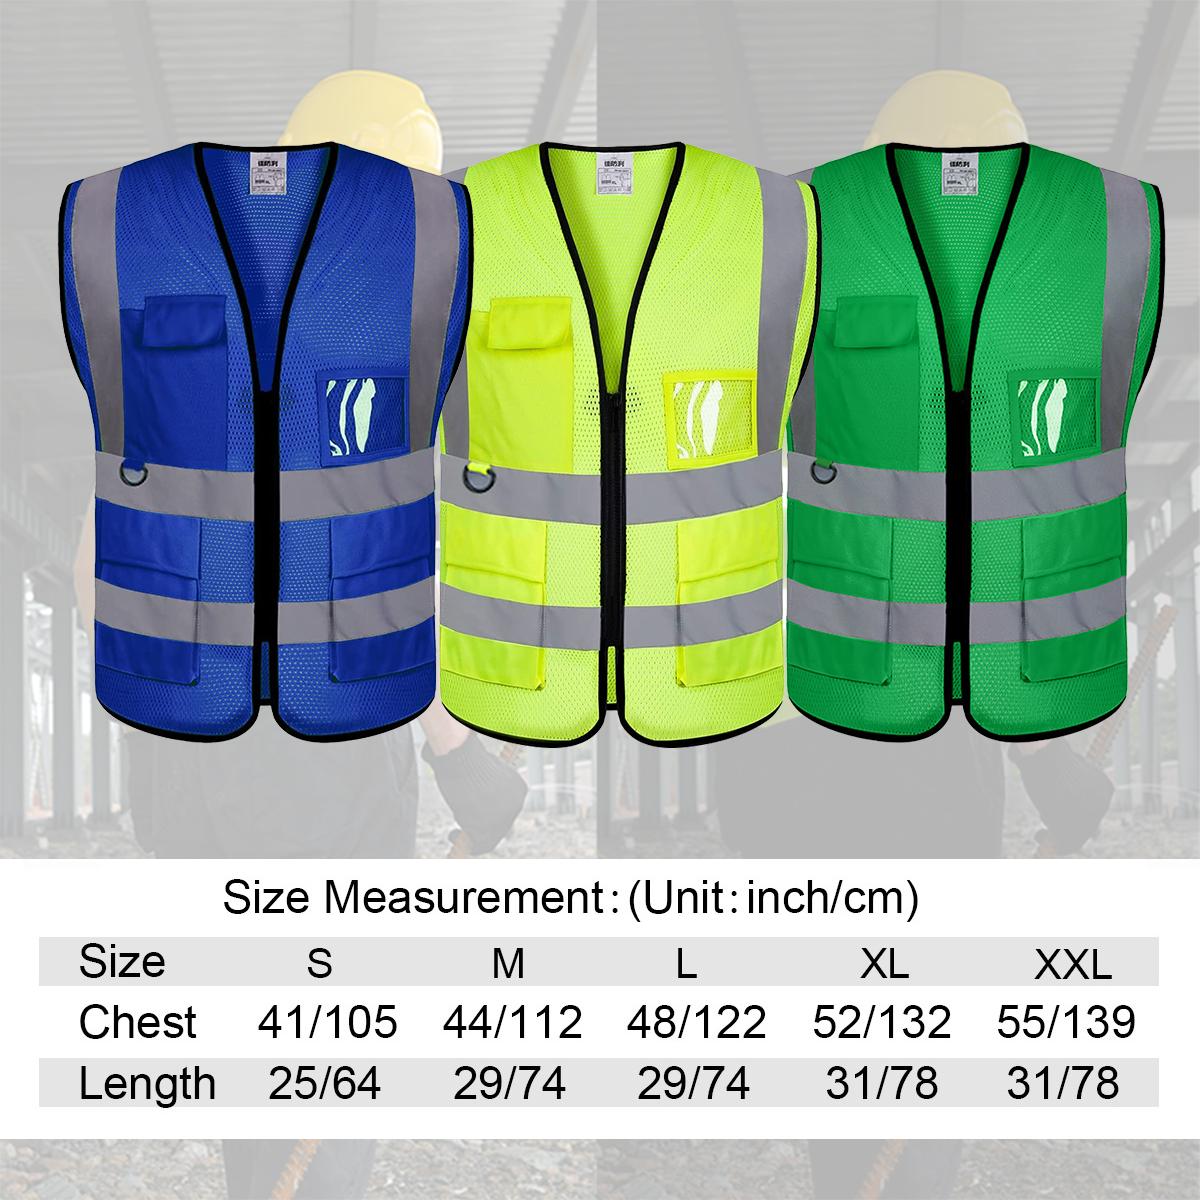 xxl green vest